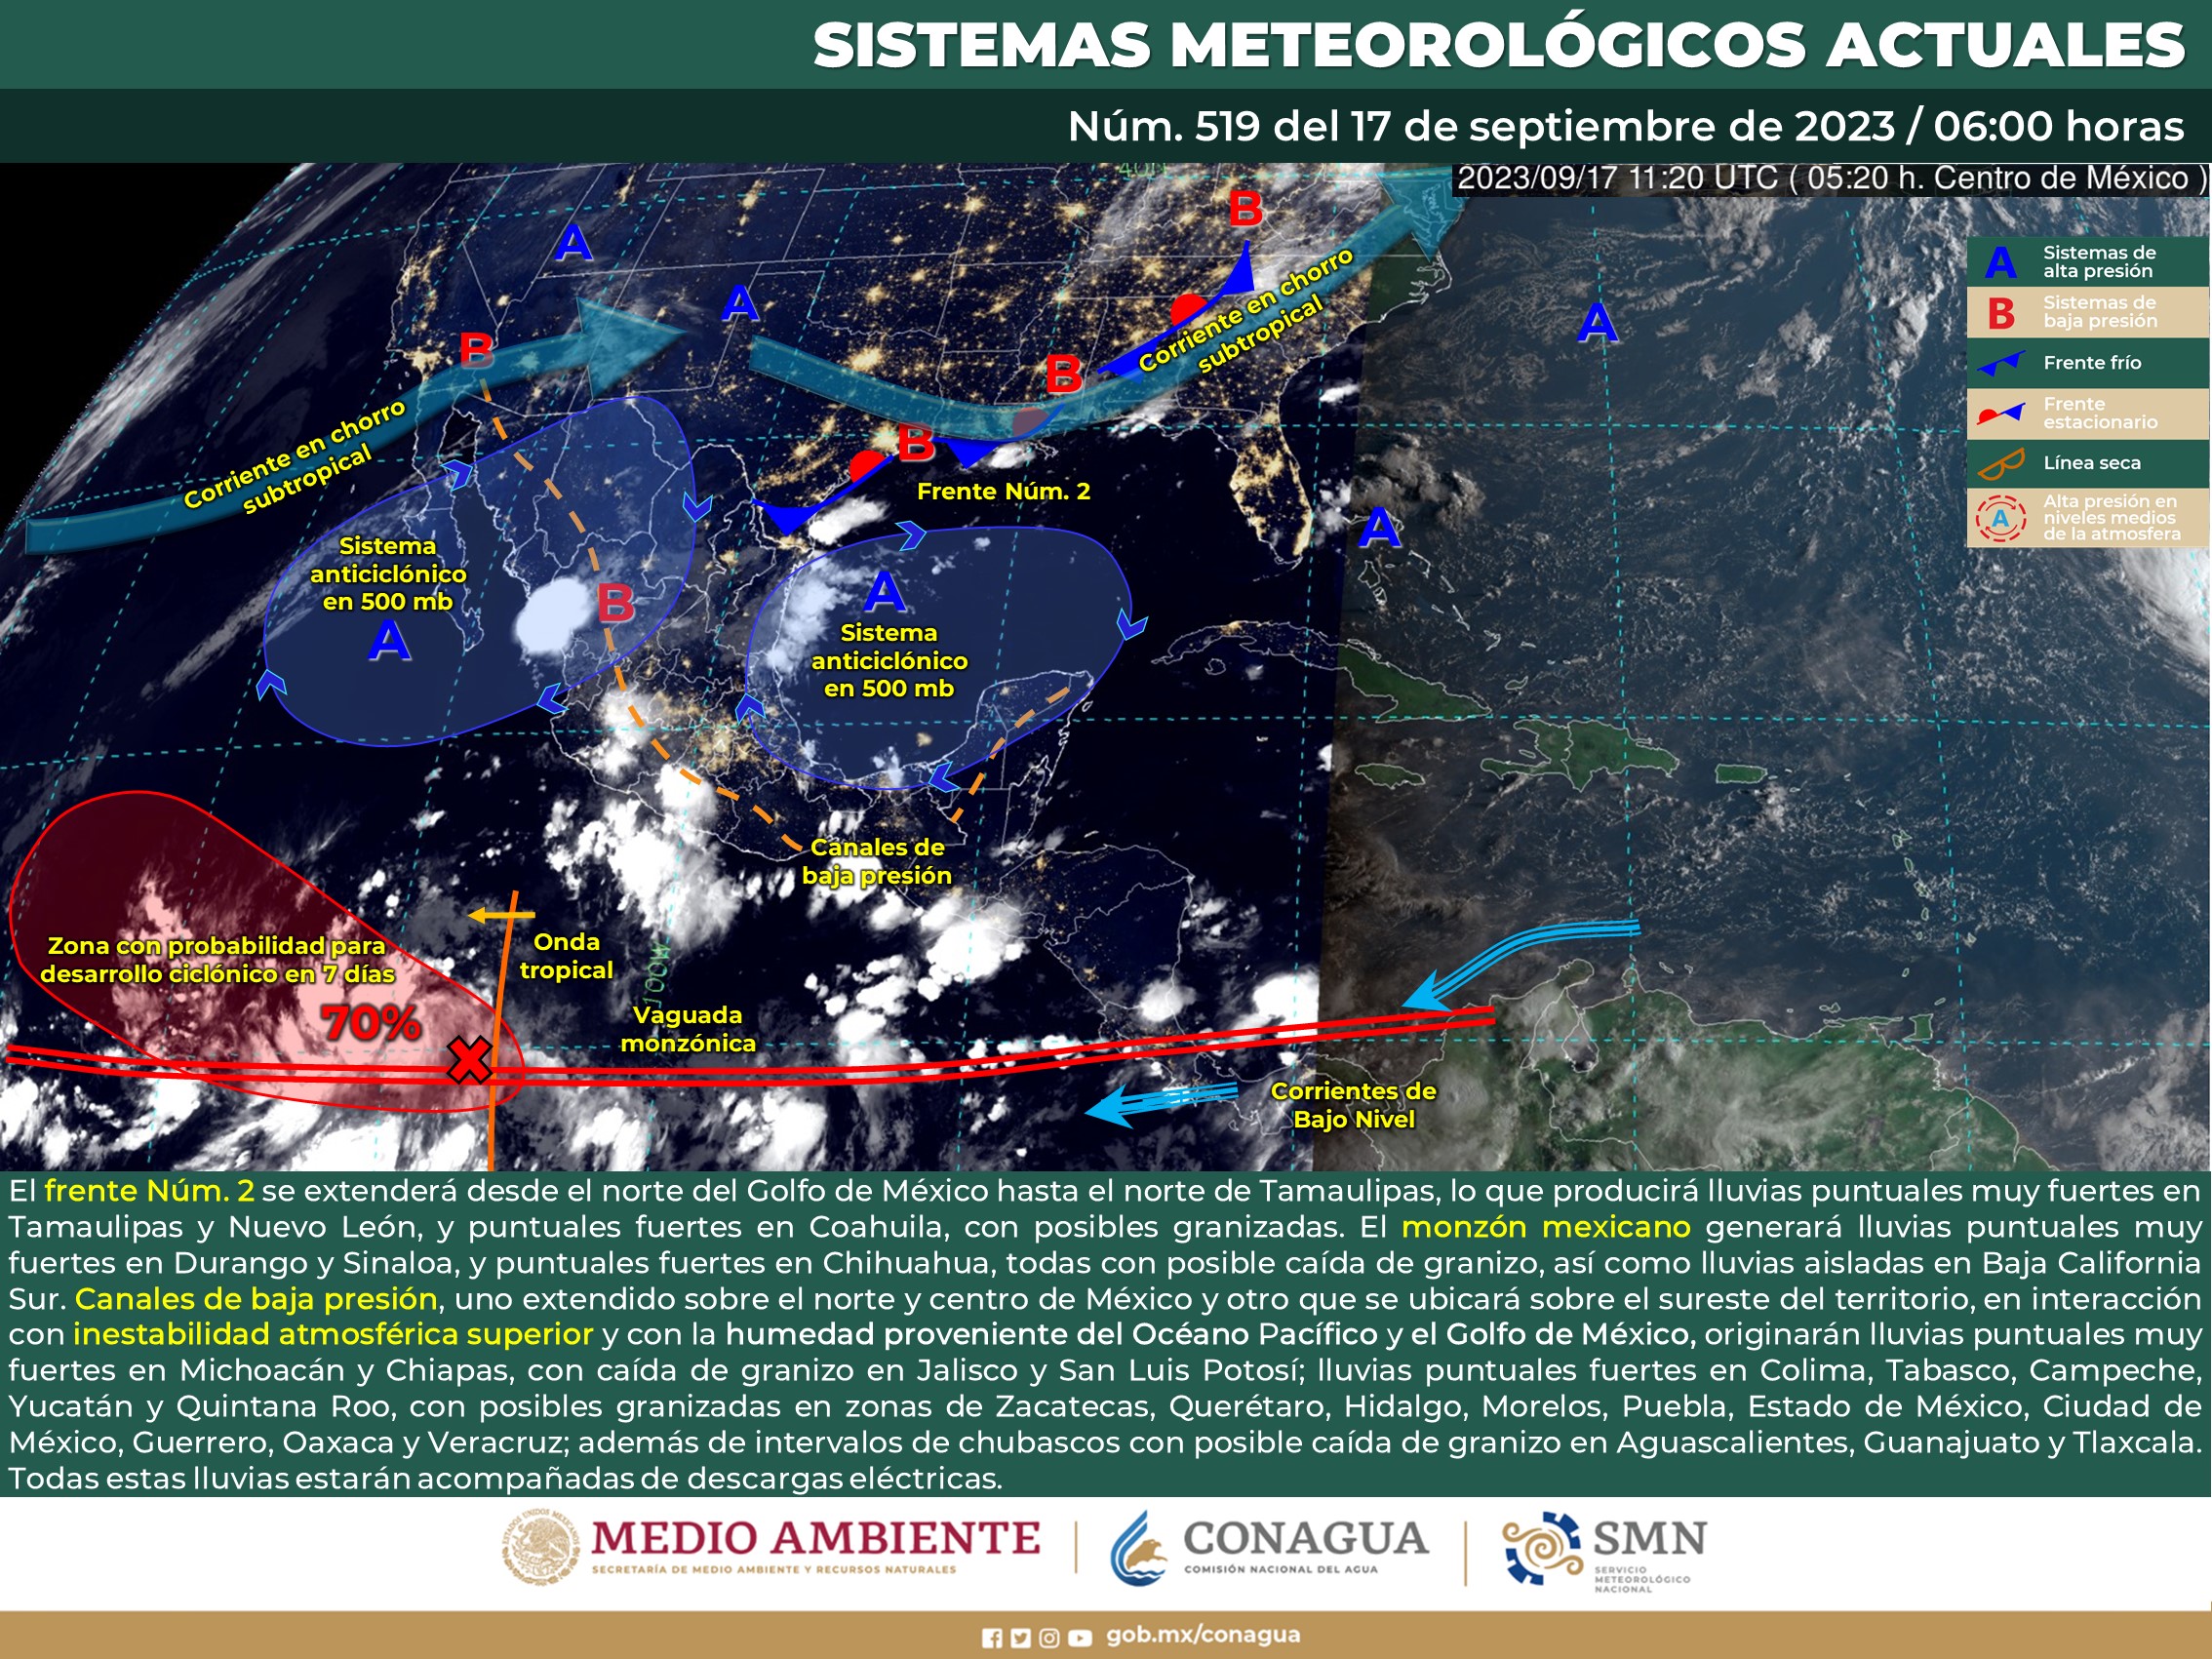 SMN prevé lluvias fuetes en Sinaloa, Durango, Nuevo León, San Luis Potosí, Tamaulipas, Nayarit, Jalisco, Michoacán y Chiapas